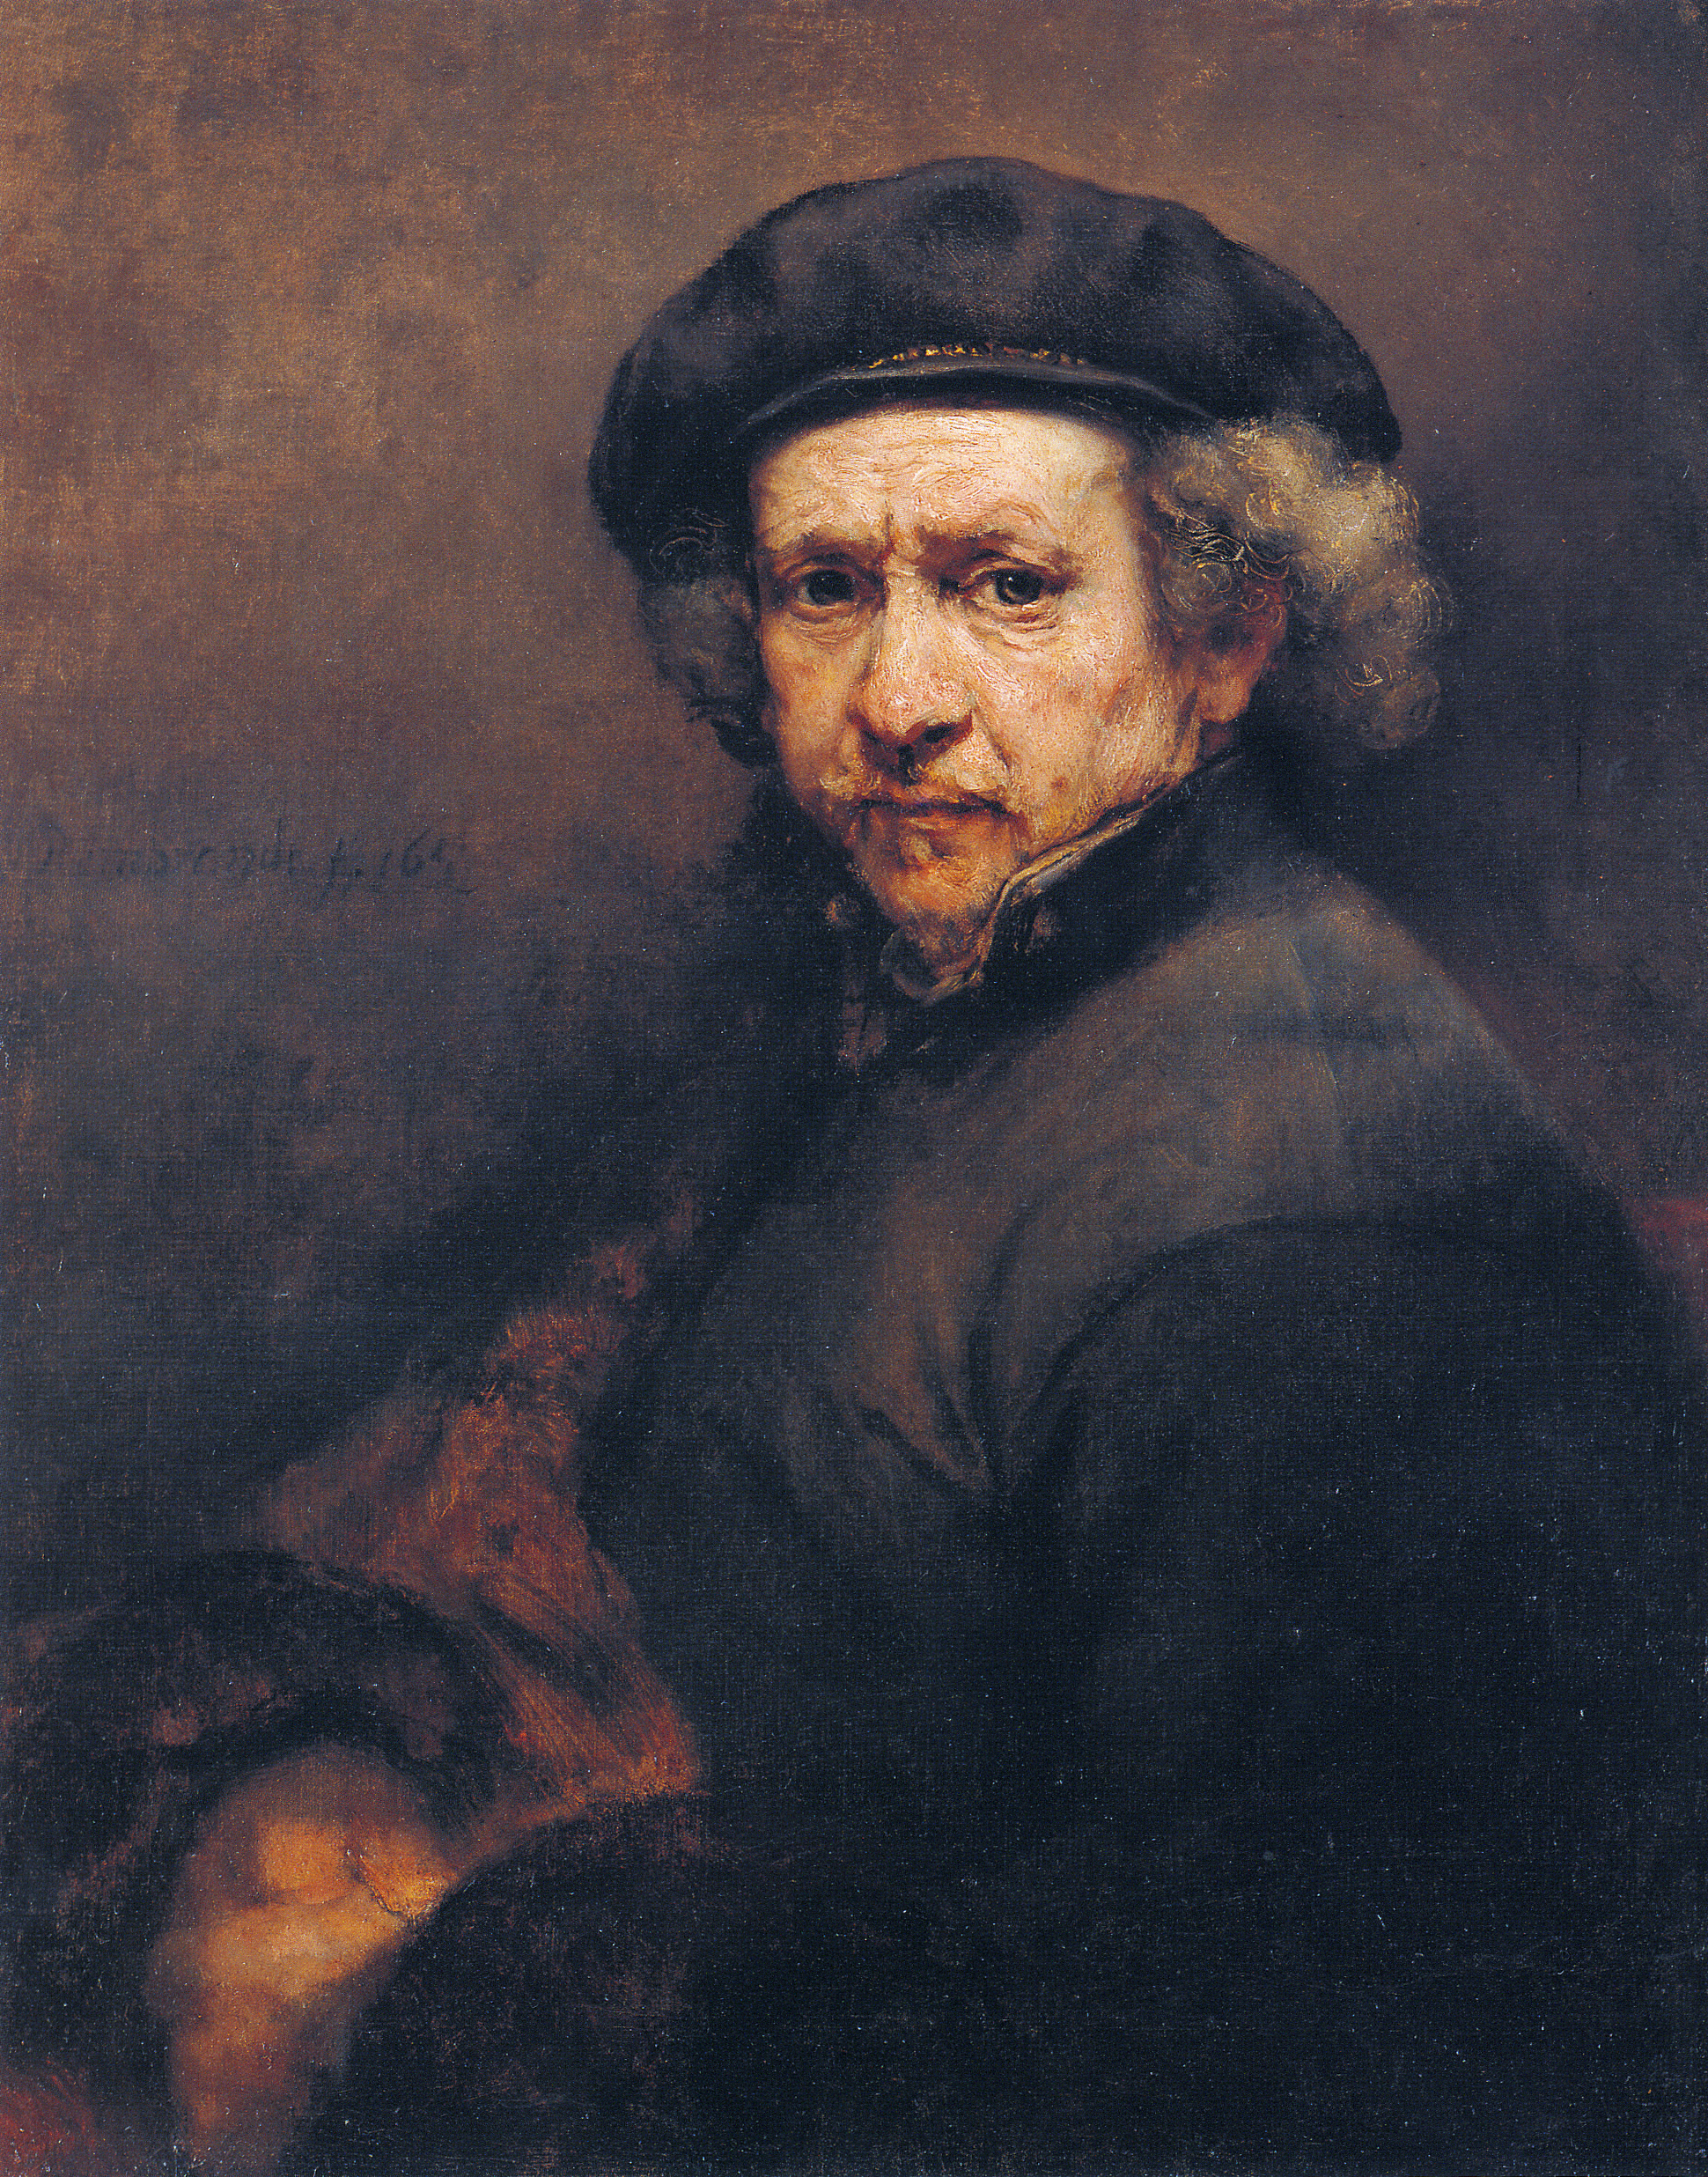 Selvportrett, Rembrandt, 1659, National Gallery of Art, Washingtion, USA
     (http://upload.wikimedia.org/wikipedia/commons/1/18/Rembrandt_self_portrait.jpg)